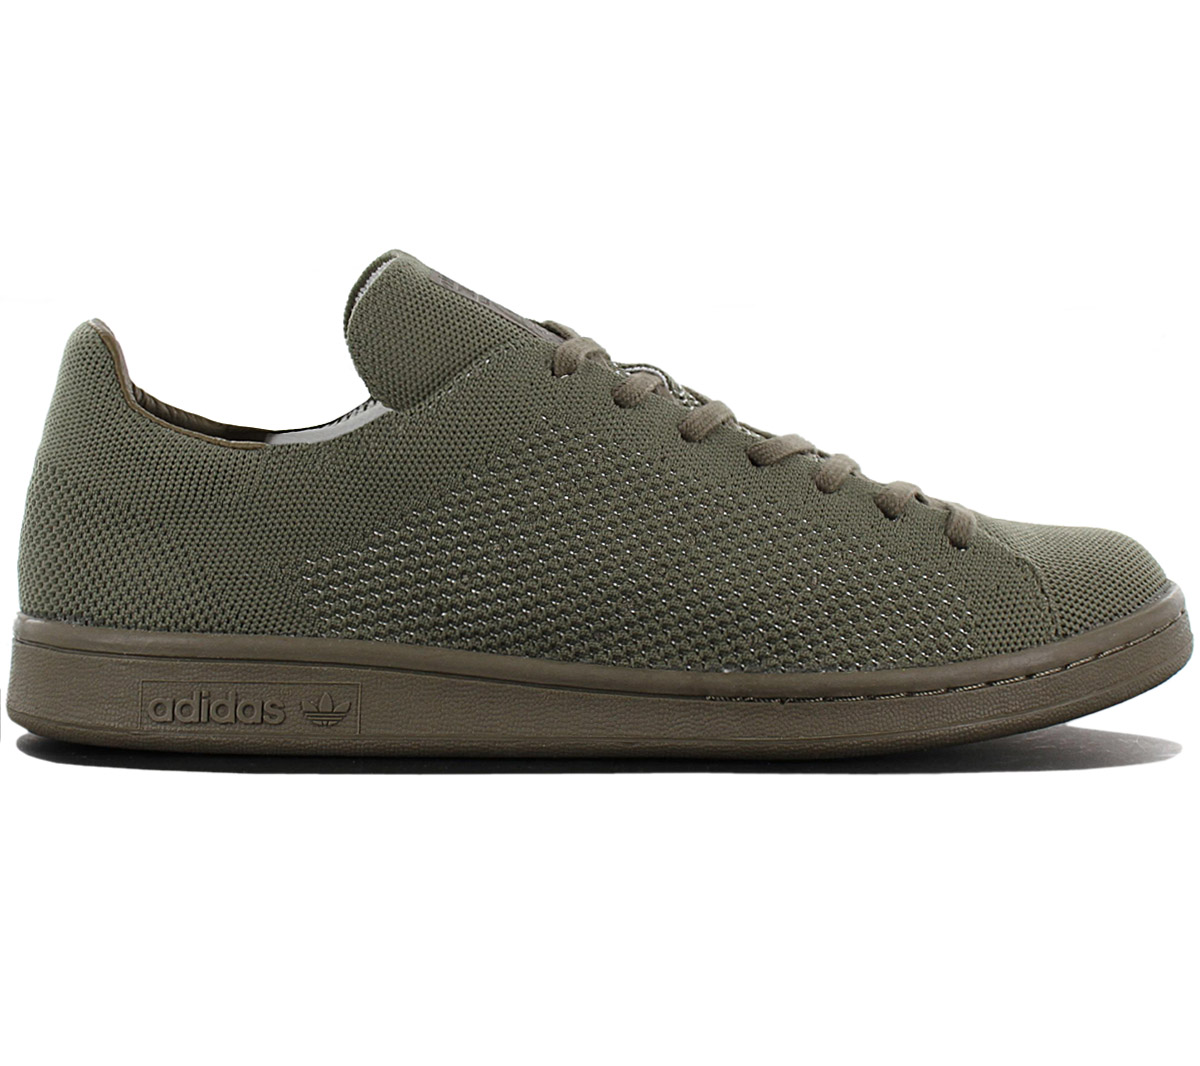 Adidas Originals Stan Smith Pk Primeknit Sneaker Uomo S82155 Marrone Scarpe  | eBay